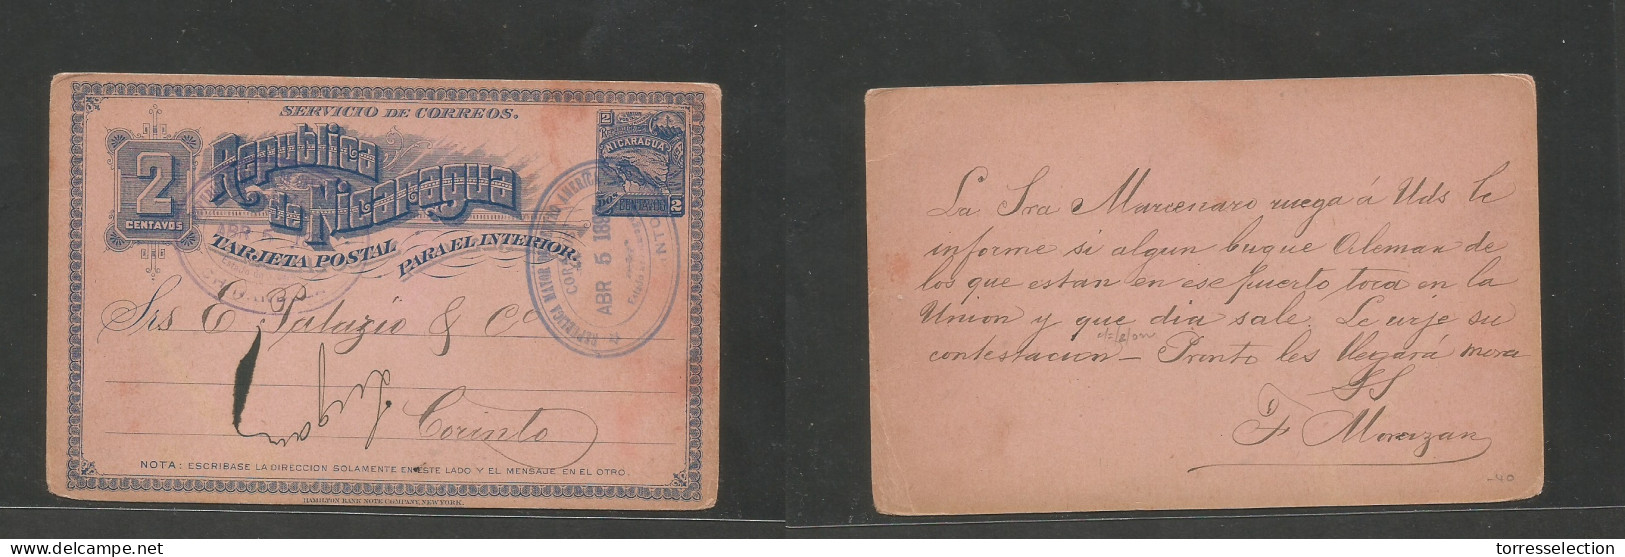 NICARAGUA. 1897 (5 April) Chinandenga - Corinto (5 April) 2c Blue Stat Illustr Card. Fine Used. - Nicaragua